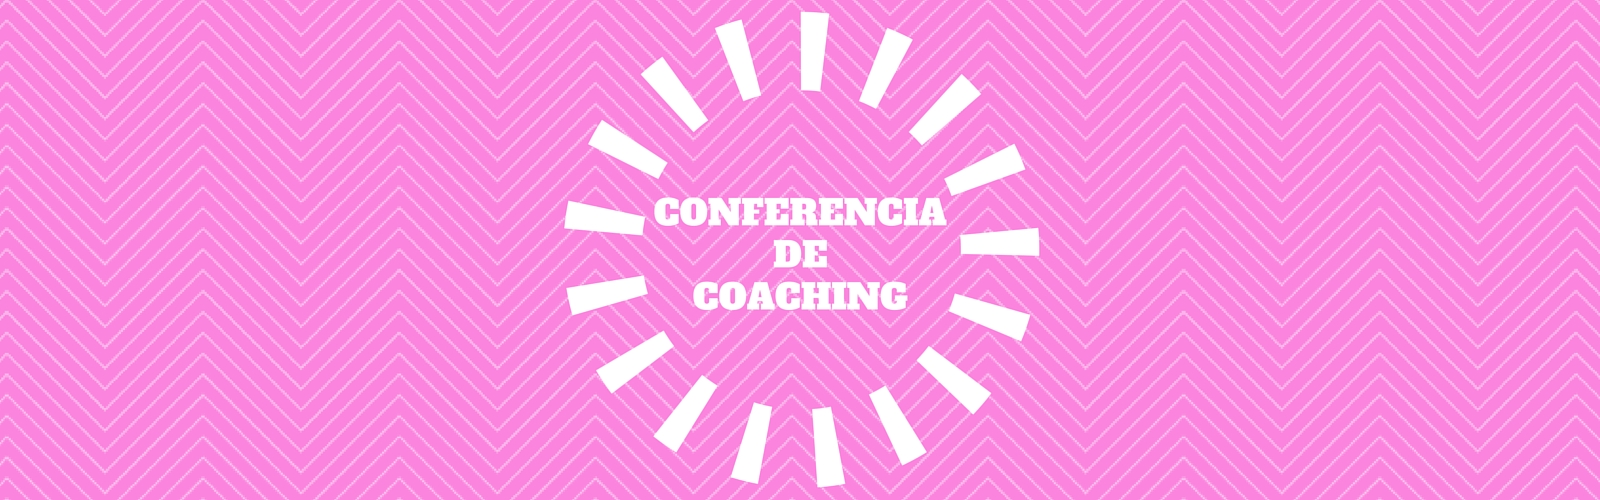 Conferencia de Coaching